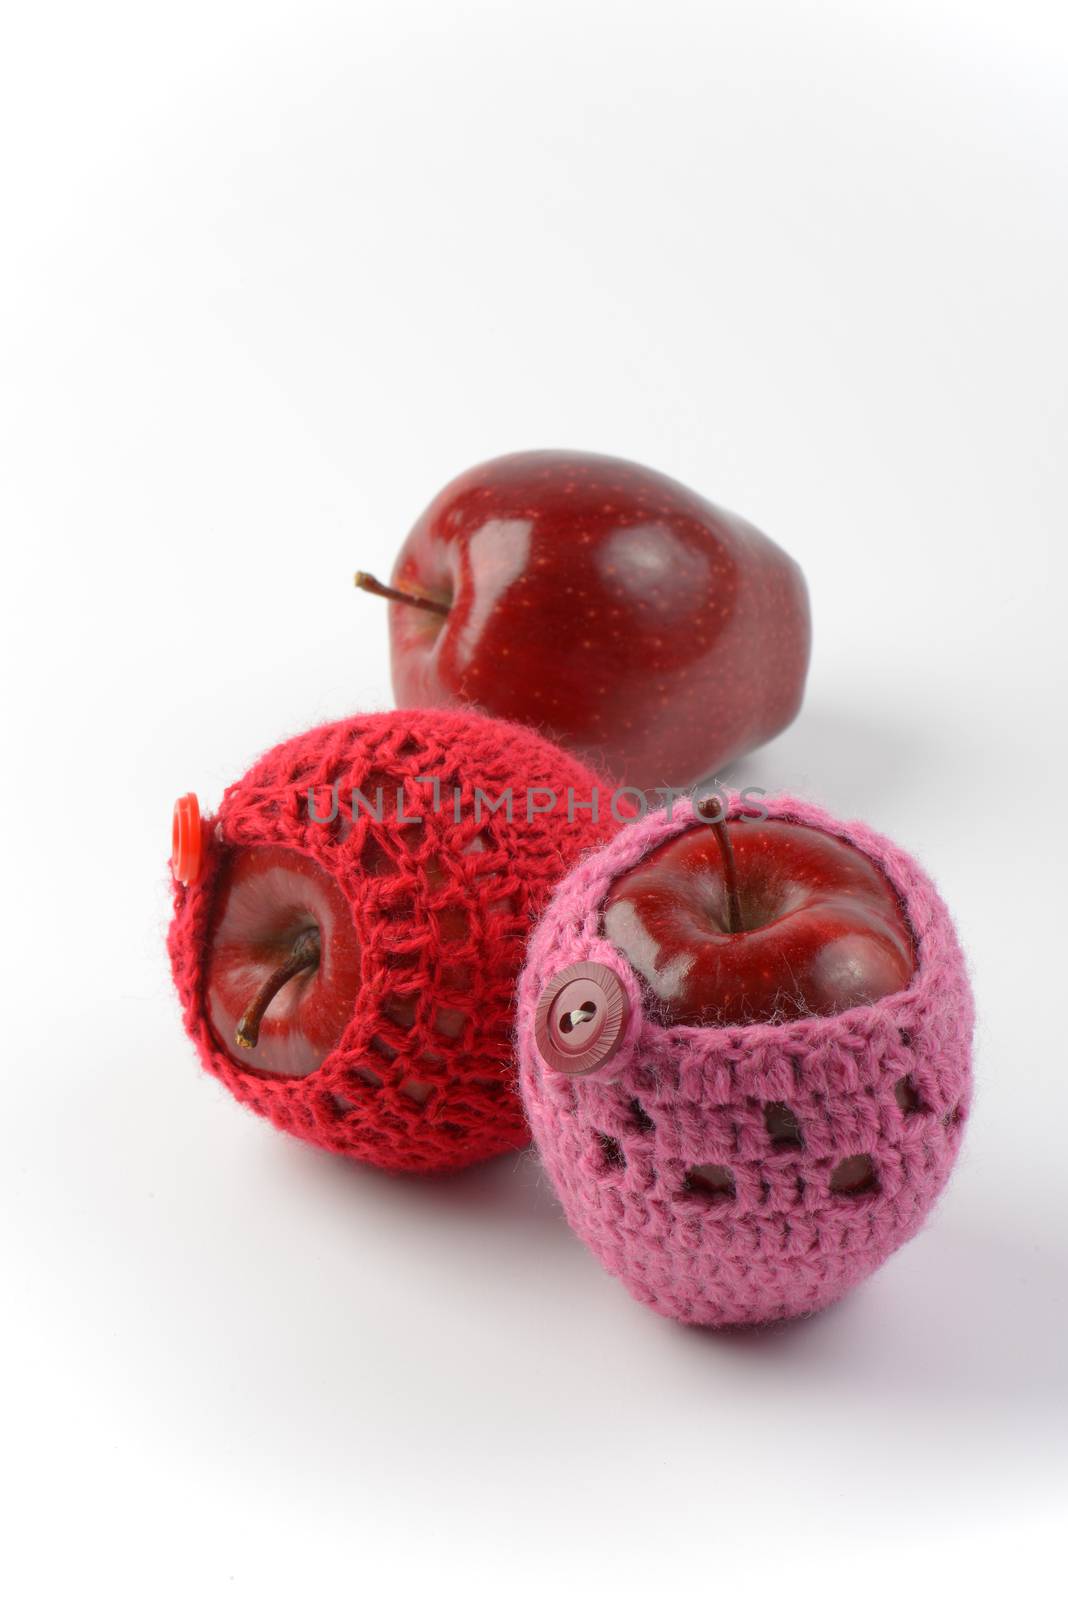 red apples in crochet cozies by Digifoodstock